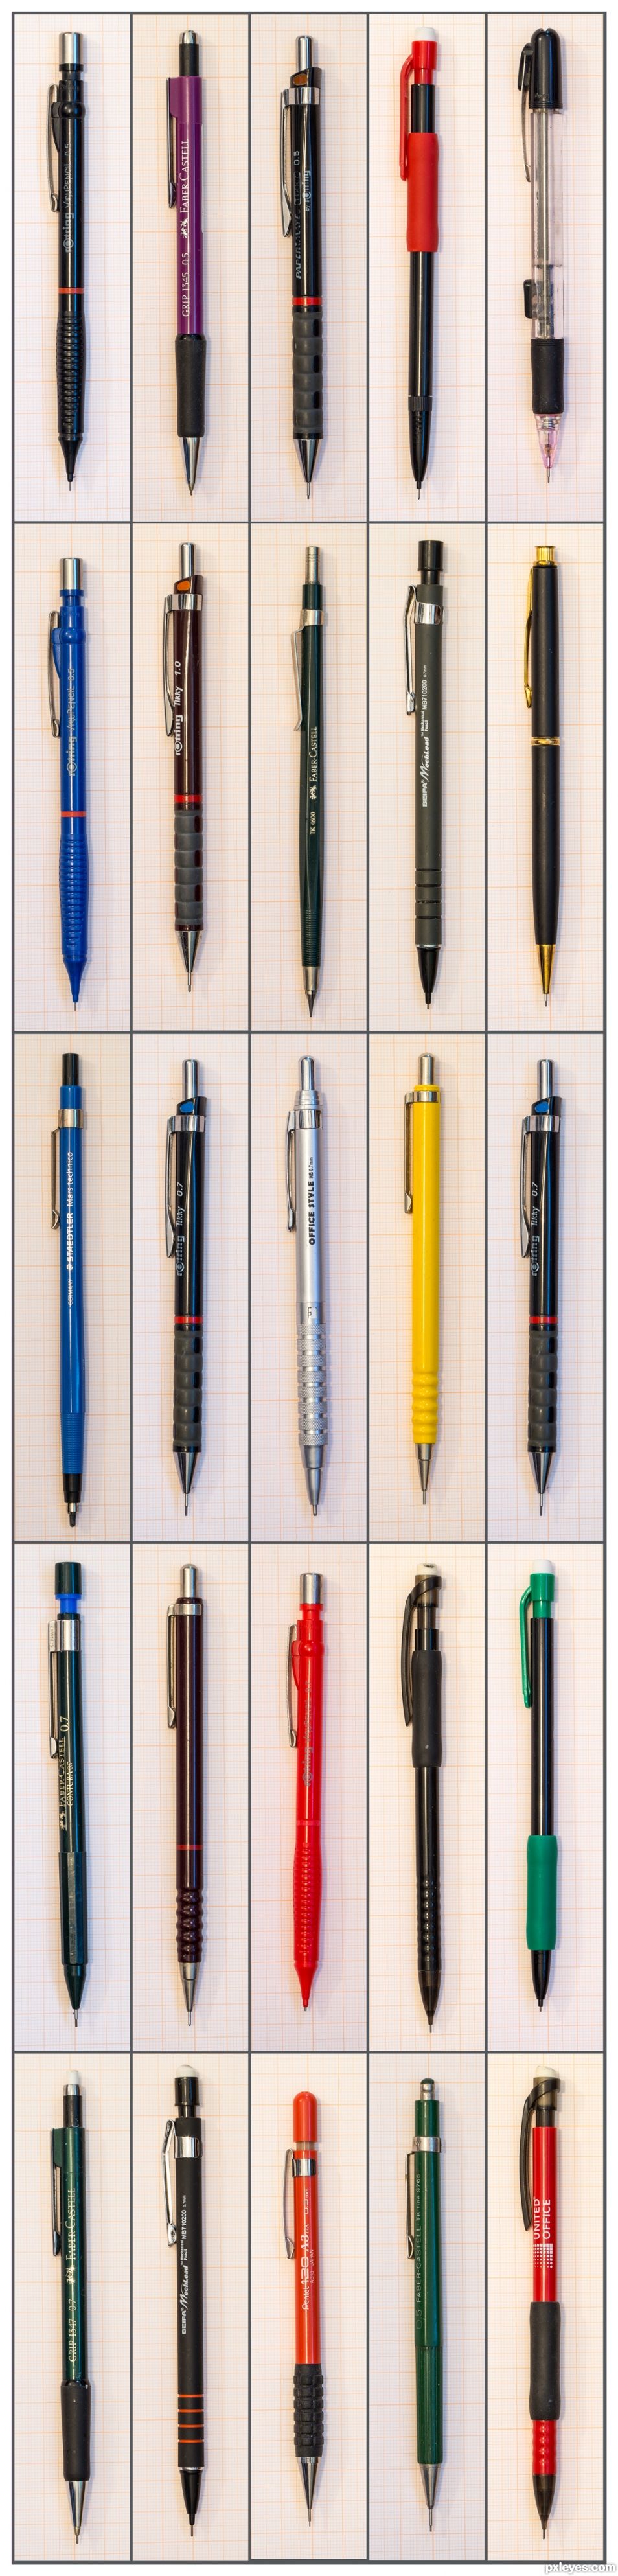 All mechanical pencils